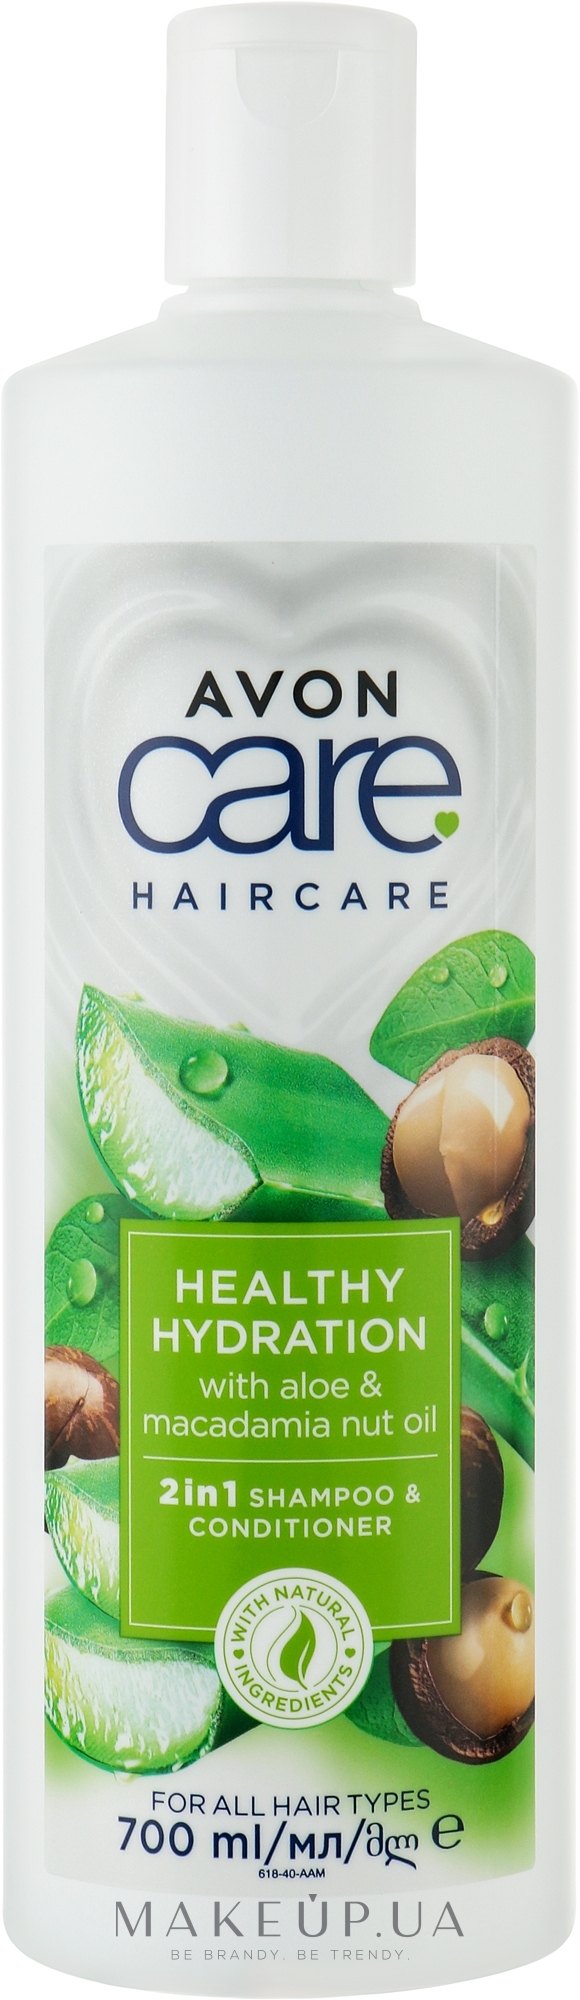 Шампунь-кондиционер для волос 2 в 1 с алоэ и орехами макадамия - Avon Care Healthy Hydration 2 In 1 Shampoo & Conditioner  — фото 700ml